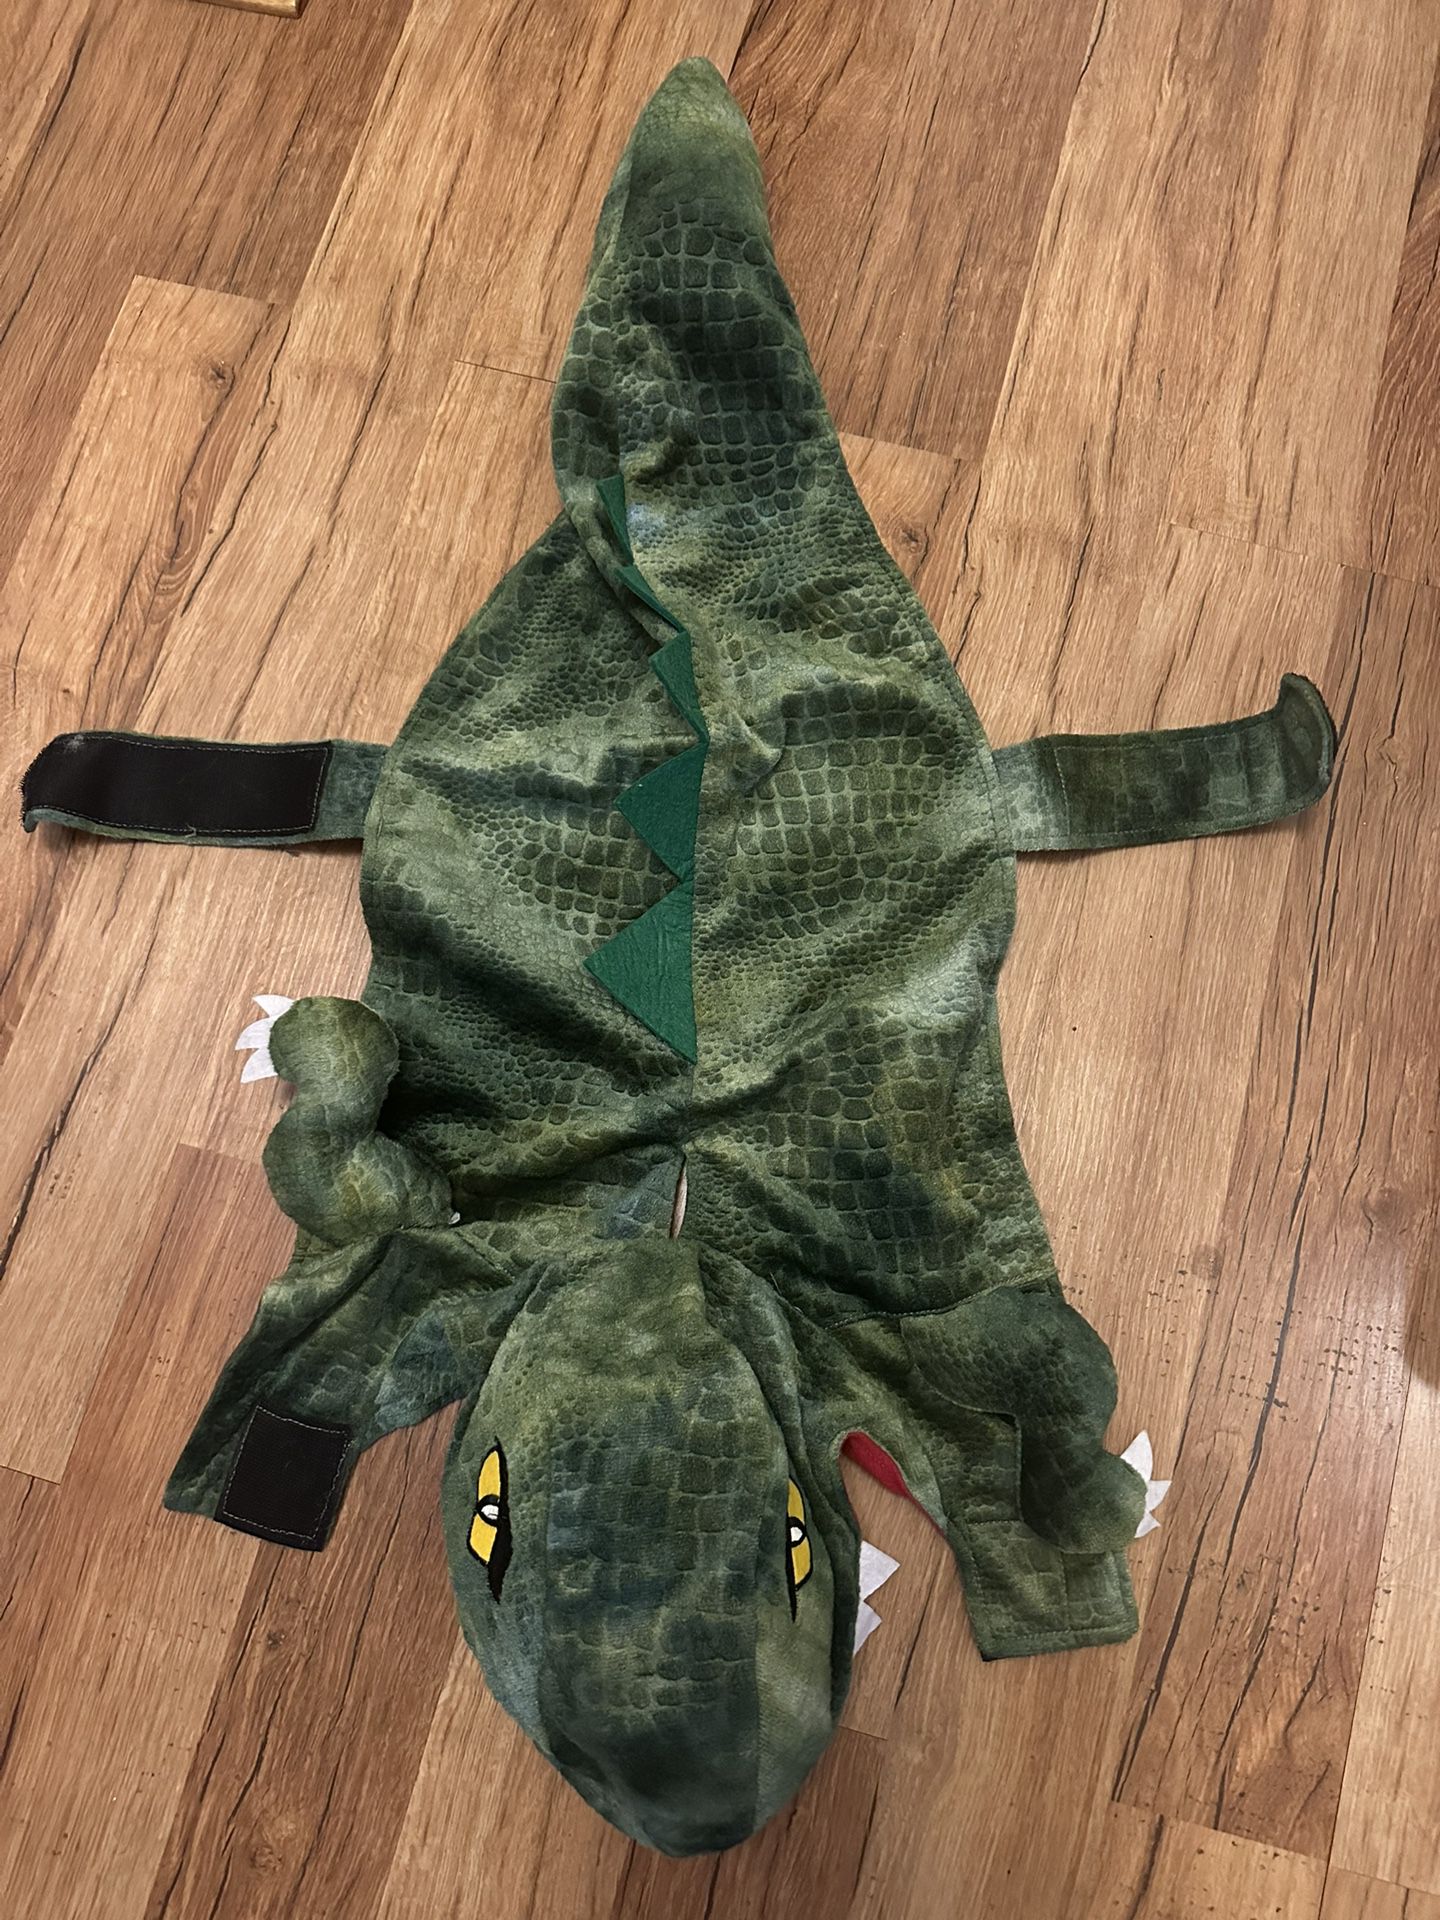 Alligator Pet Costume Size L